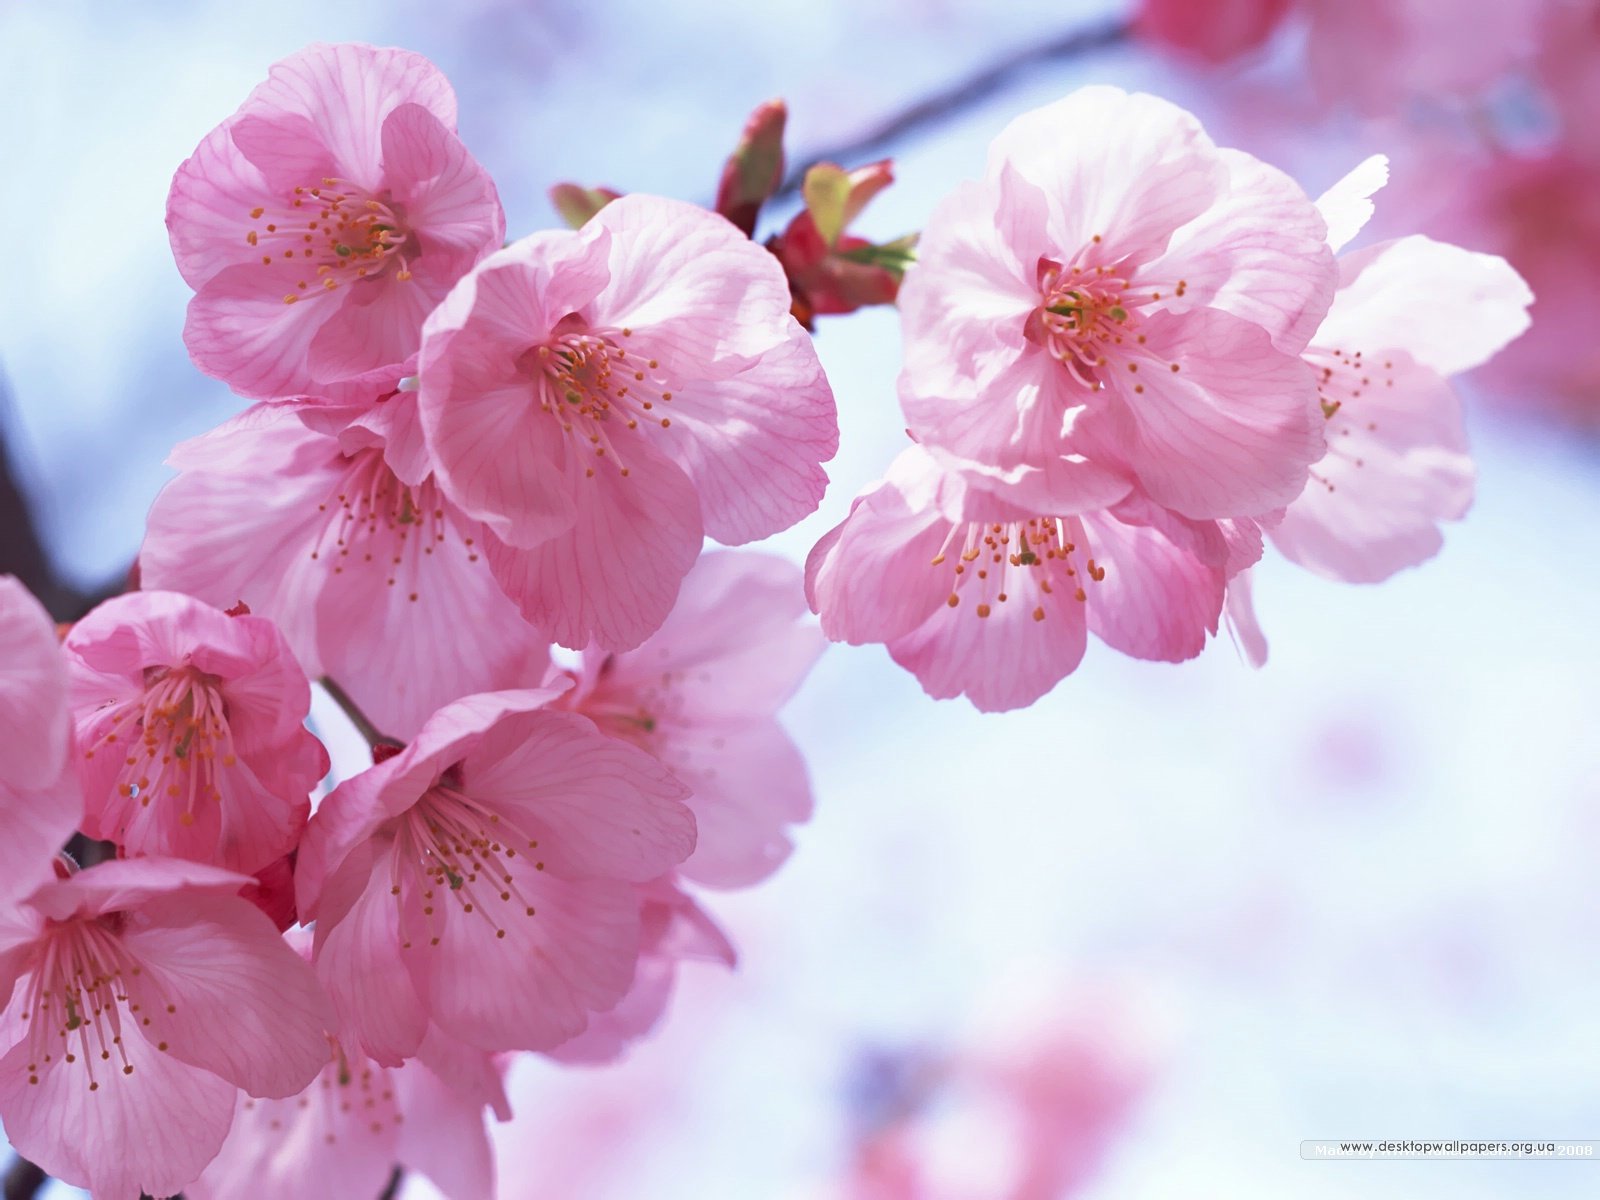 Wallpapers Desktop Wallpapers Cherry Blossom Wallpapers Flowers